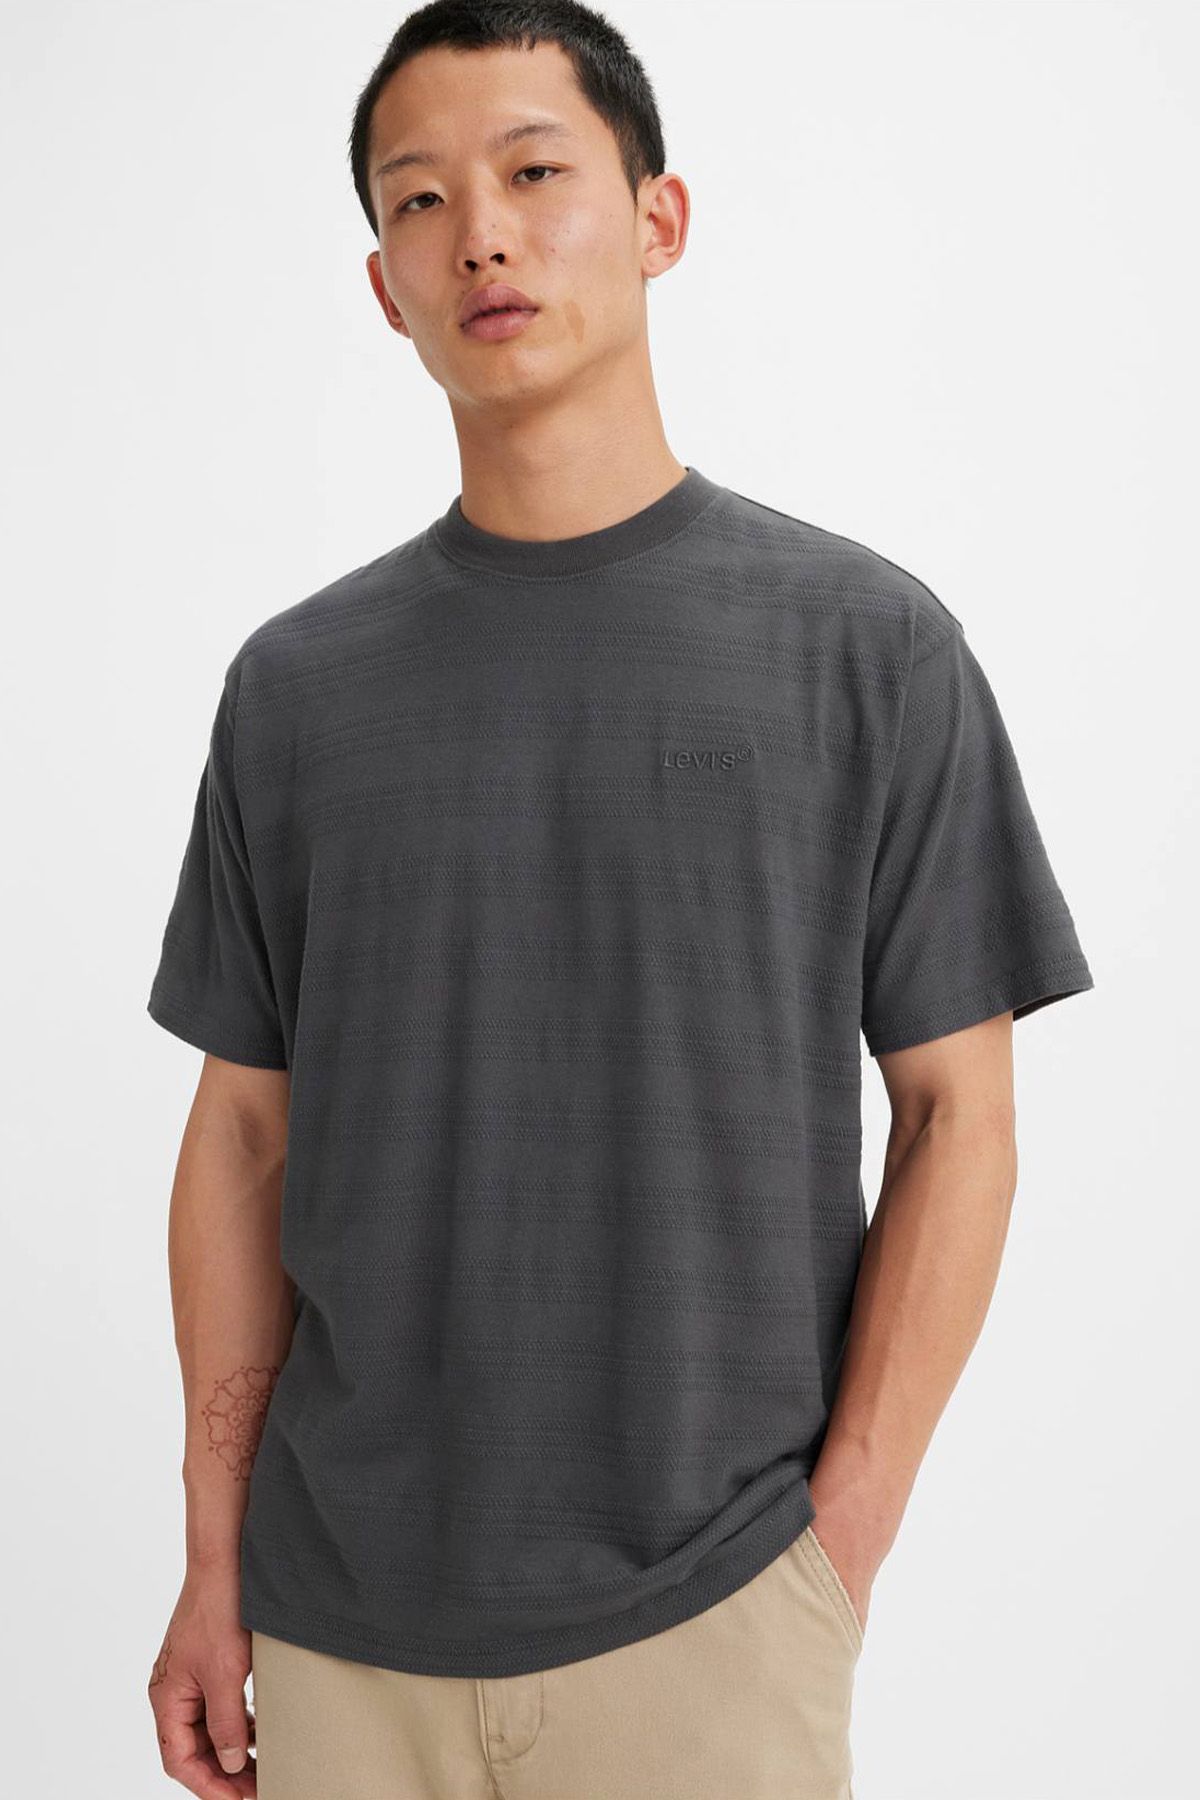 Levi's® Men's Red Tab™ Vintage T-Shirt Gray Men T-Shirts